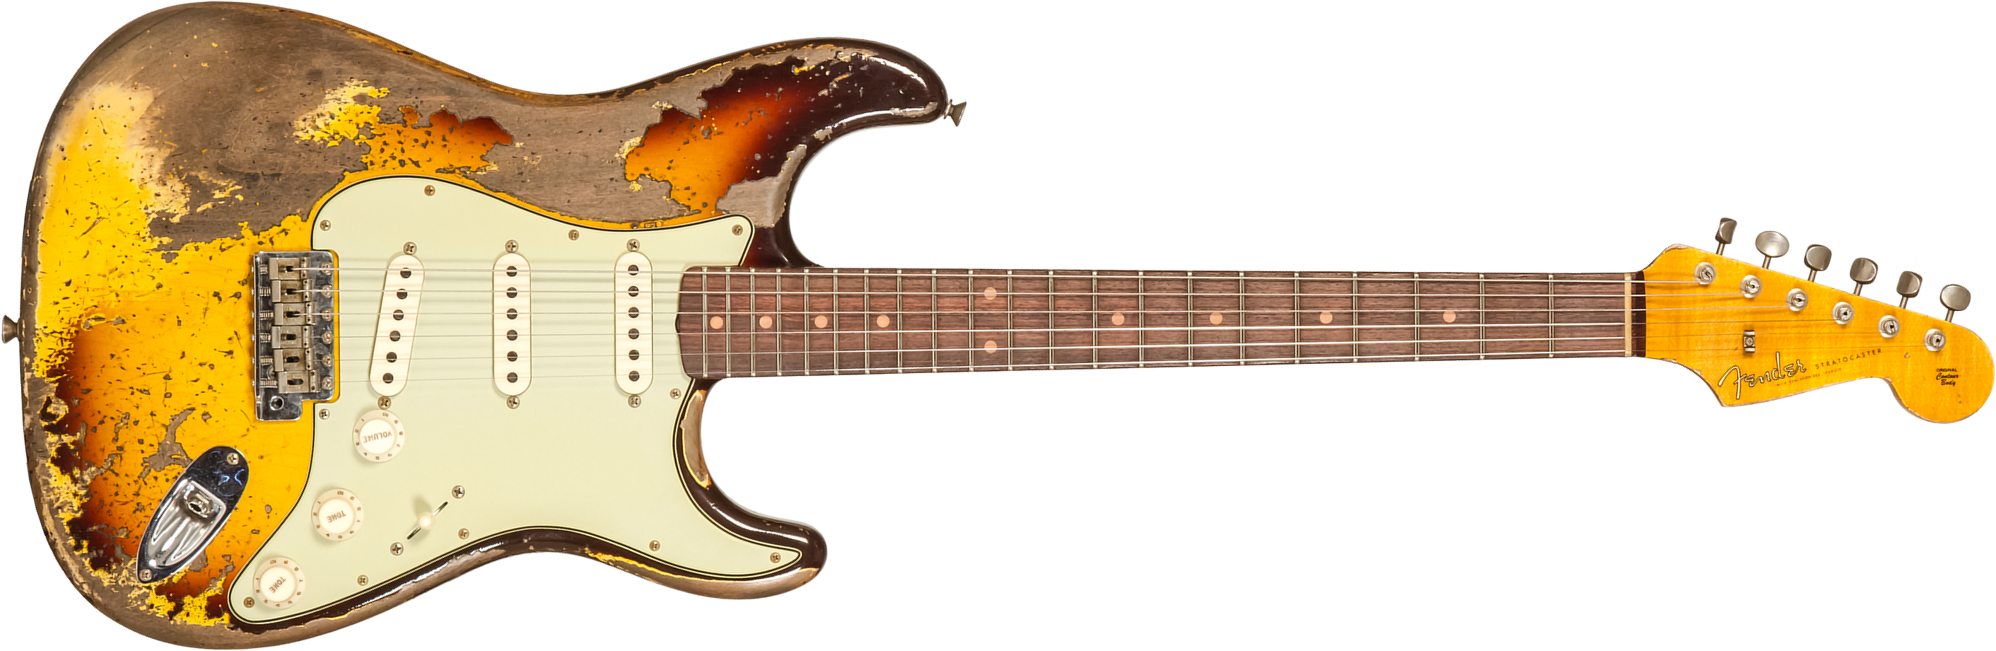 Fender Custom Shop Strat 1959 3s Trem Rw #cz569850 - Super Heavy Relic Aged Chocolate 3-color Sunburst - E-Gitarre in Str-Form - Main picture